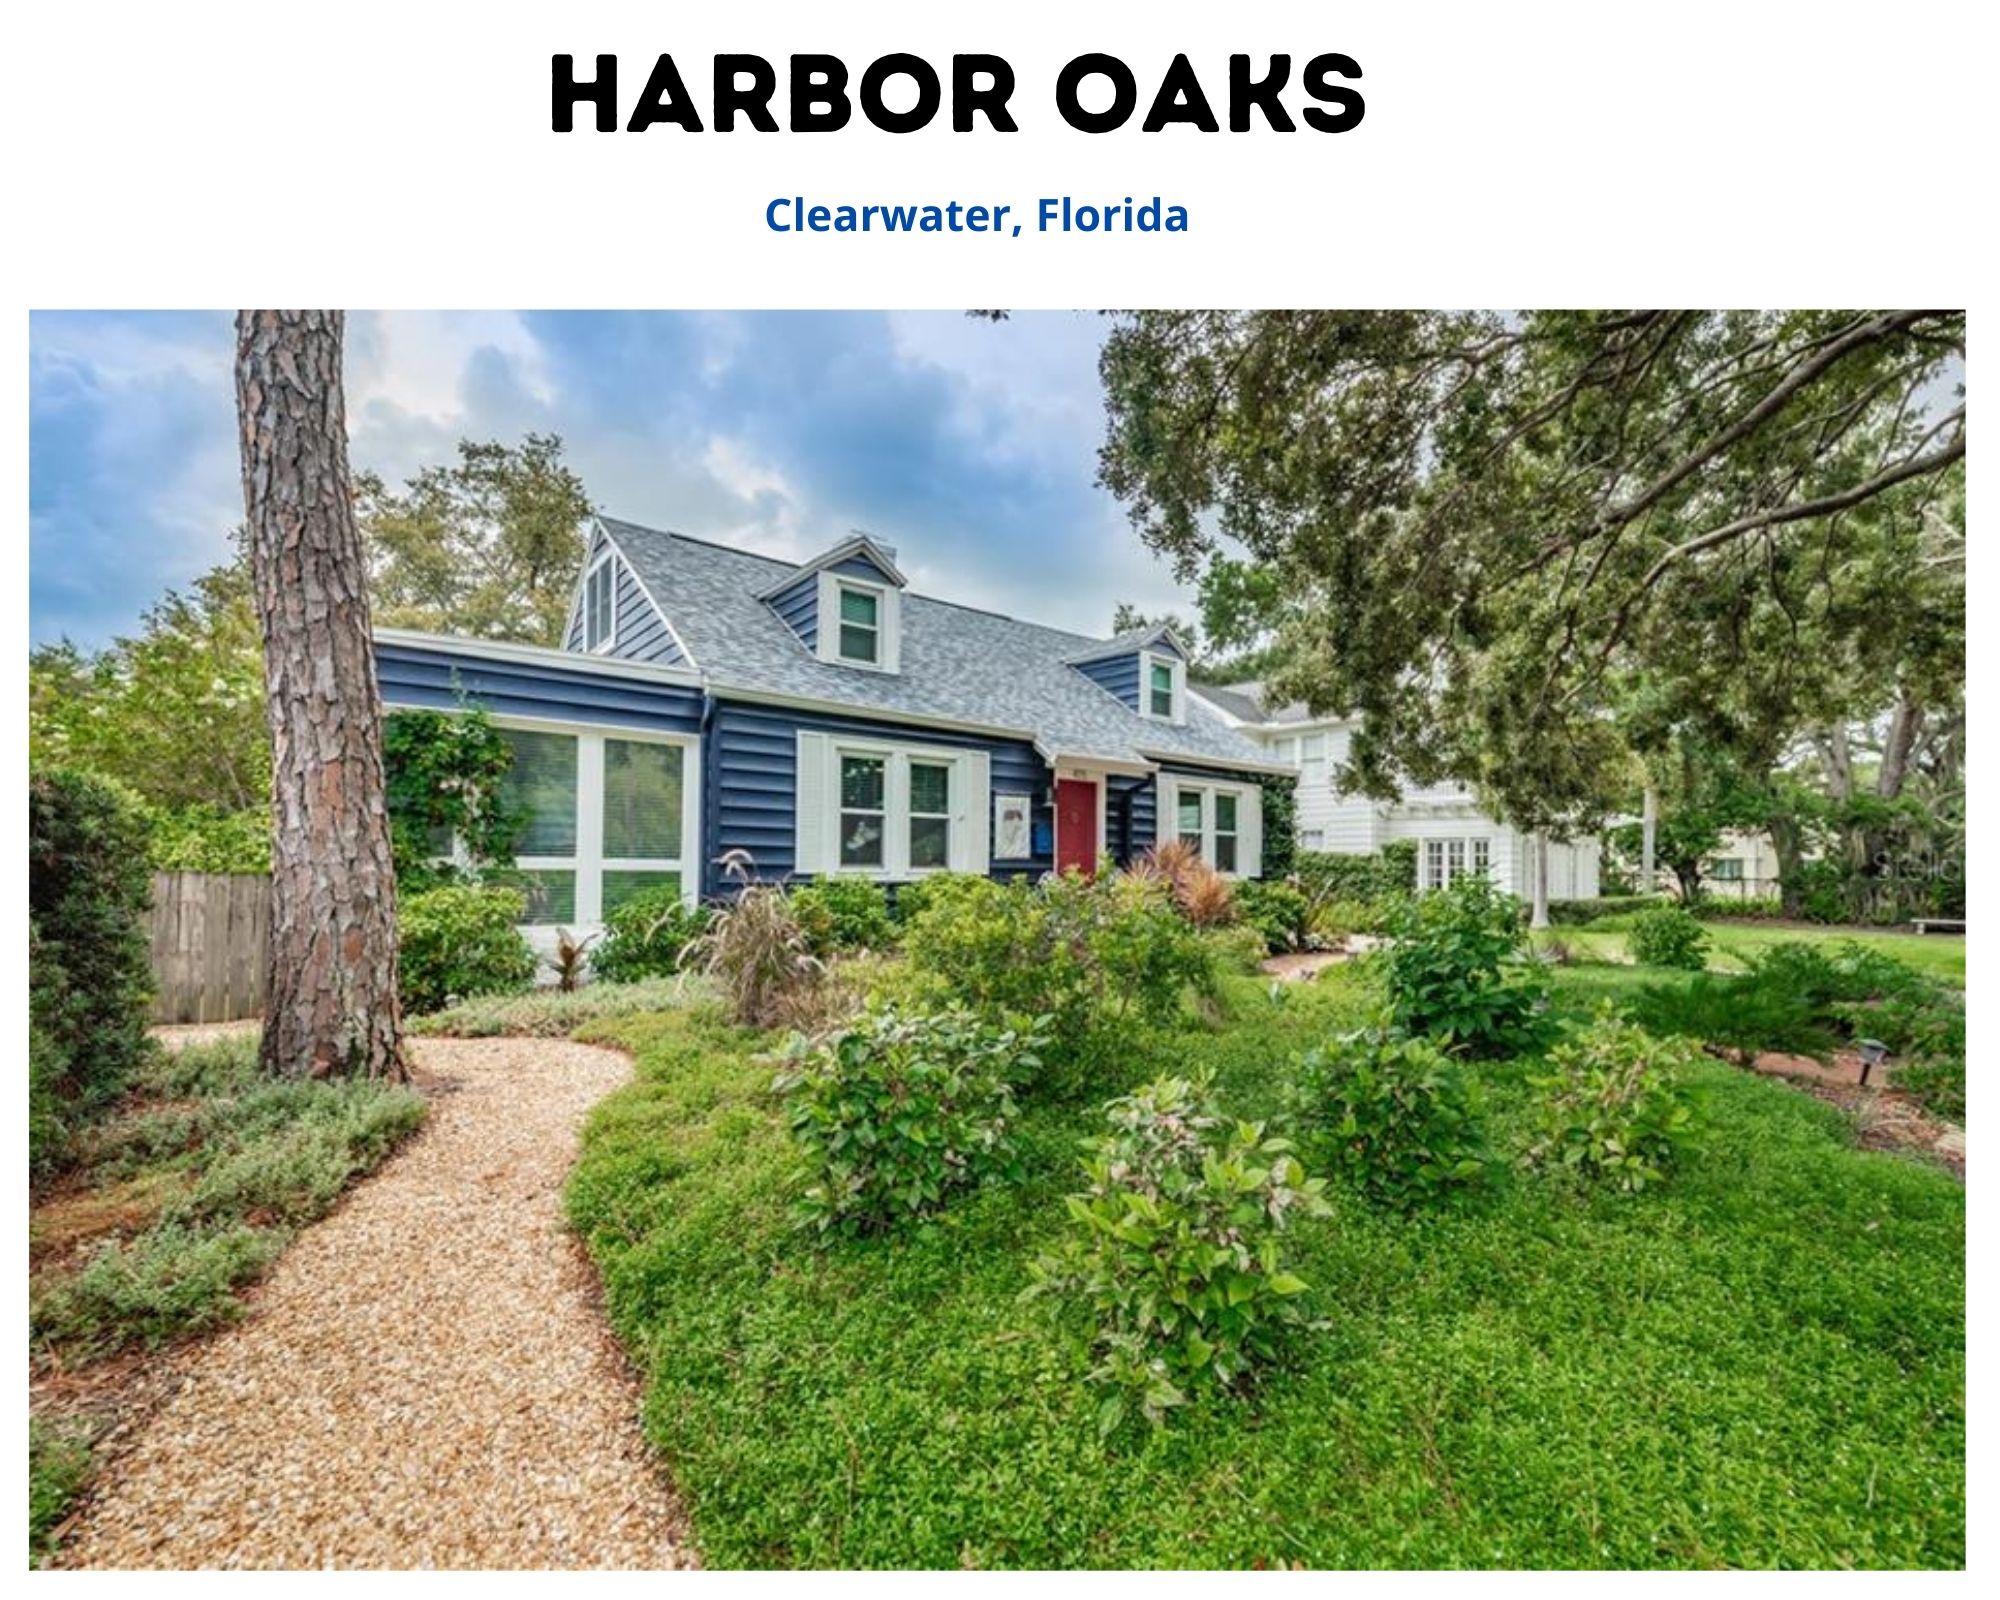 Harbor Oaks   Neighborhood Homes for Sale   Clearwater FL Real Estate